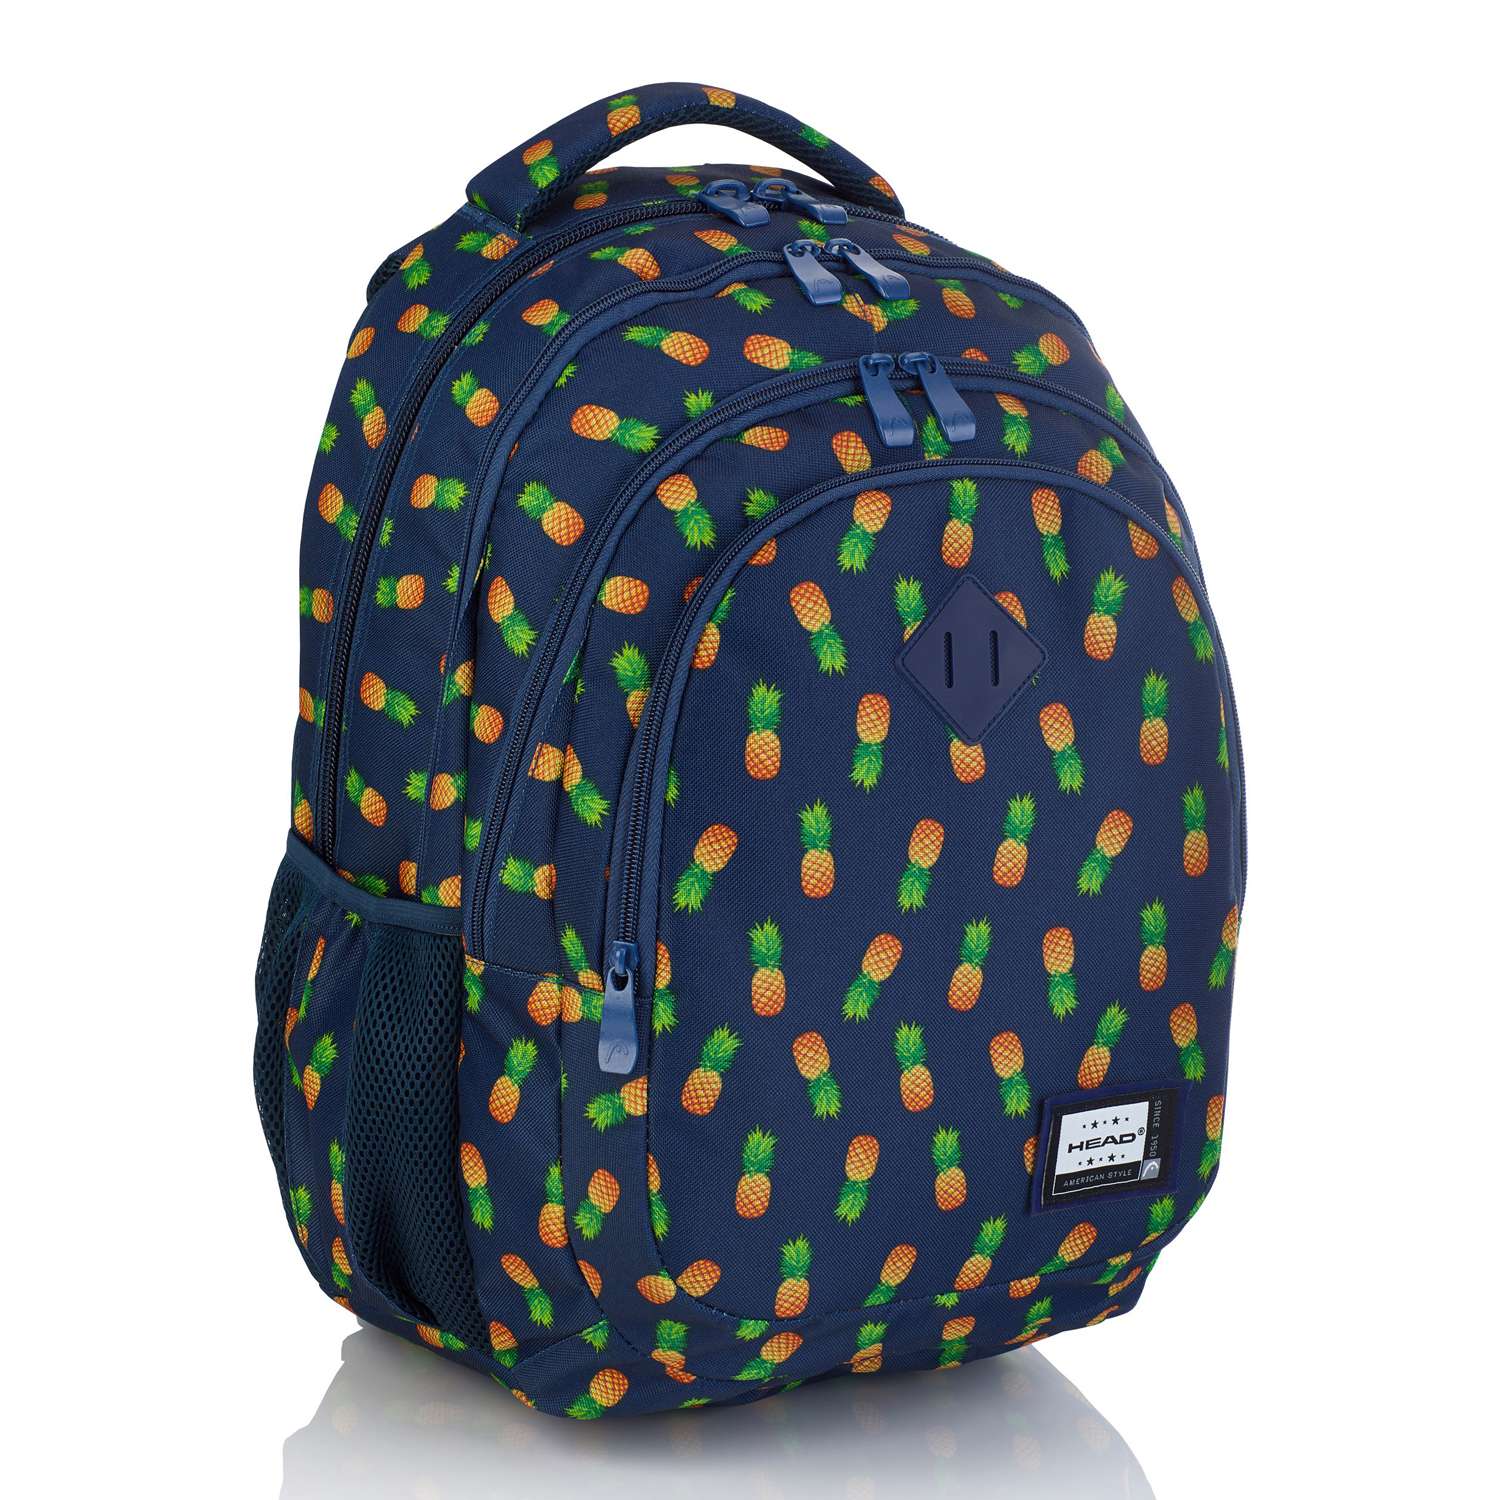 Рюкзак HEAD HD-252 цвет синий/зеленый/оранжевый - фото 1